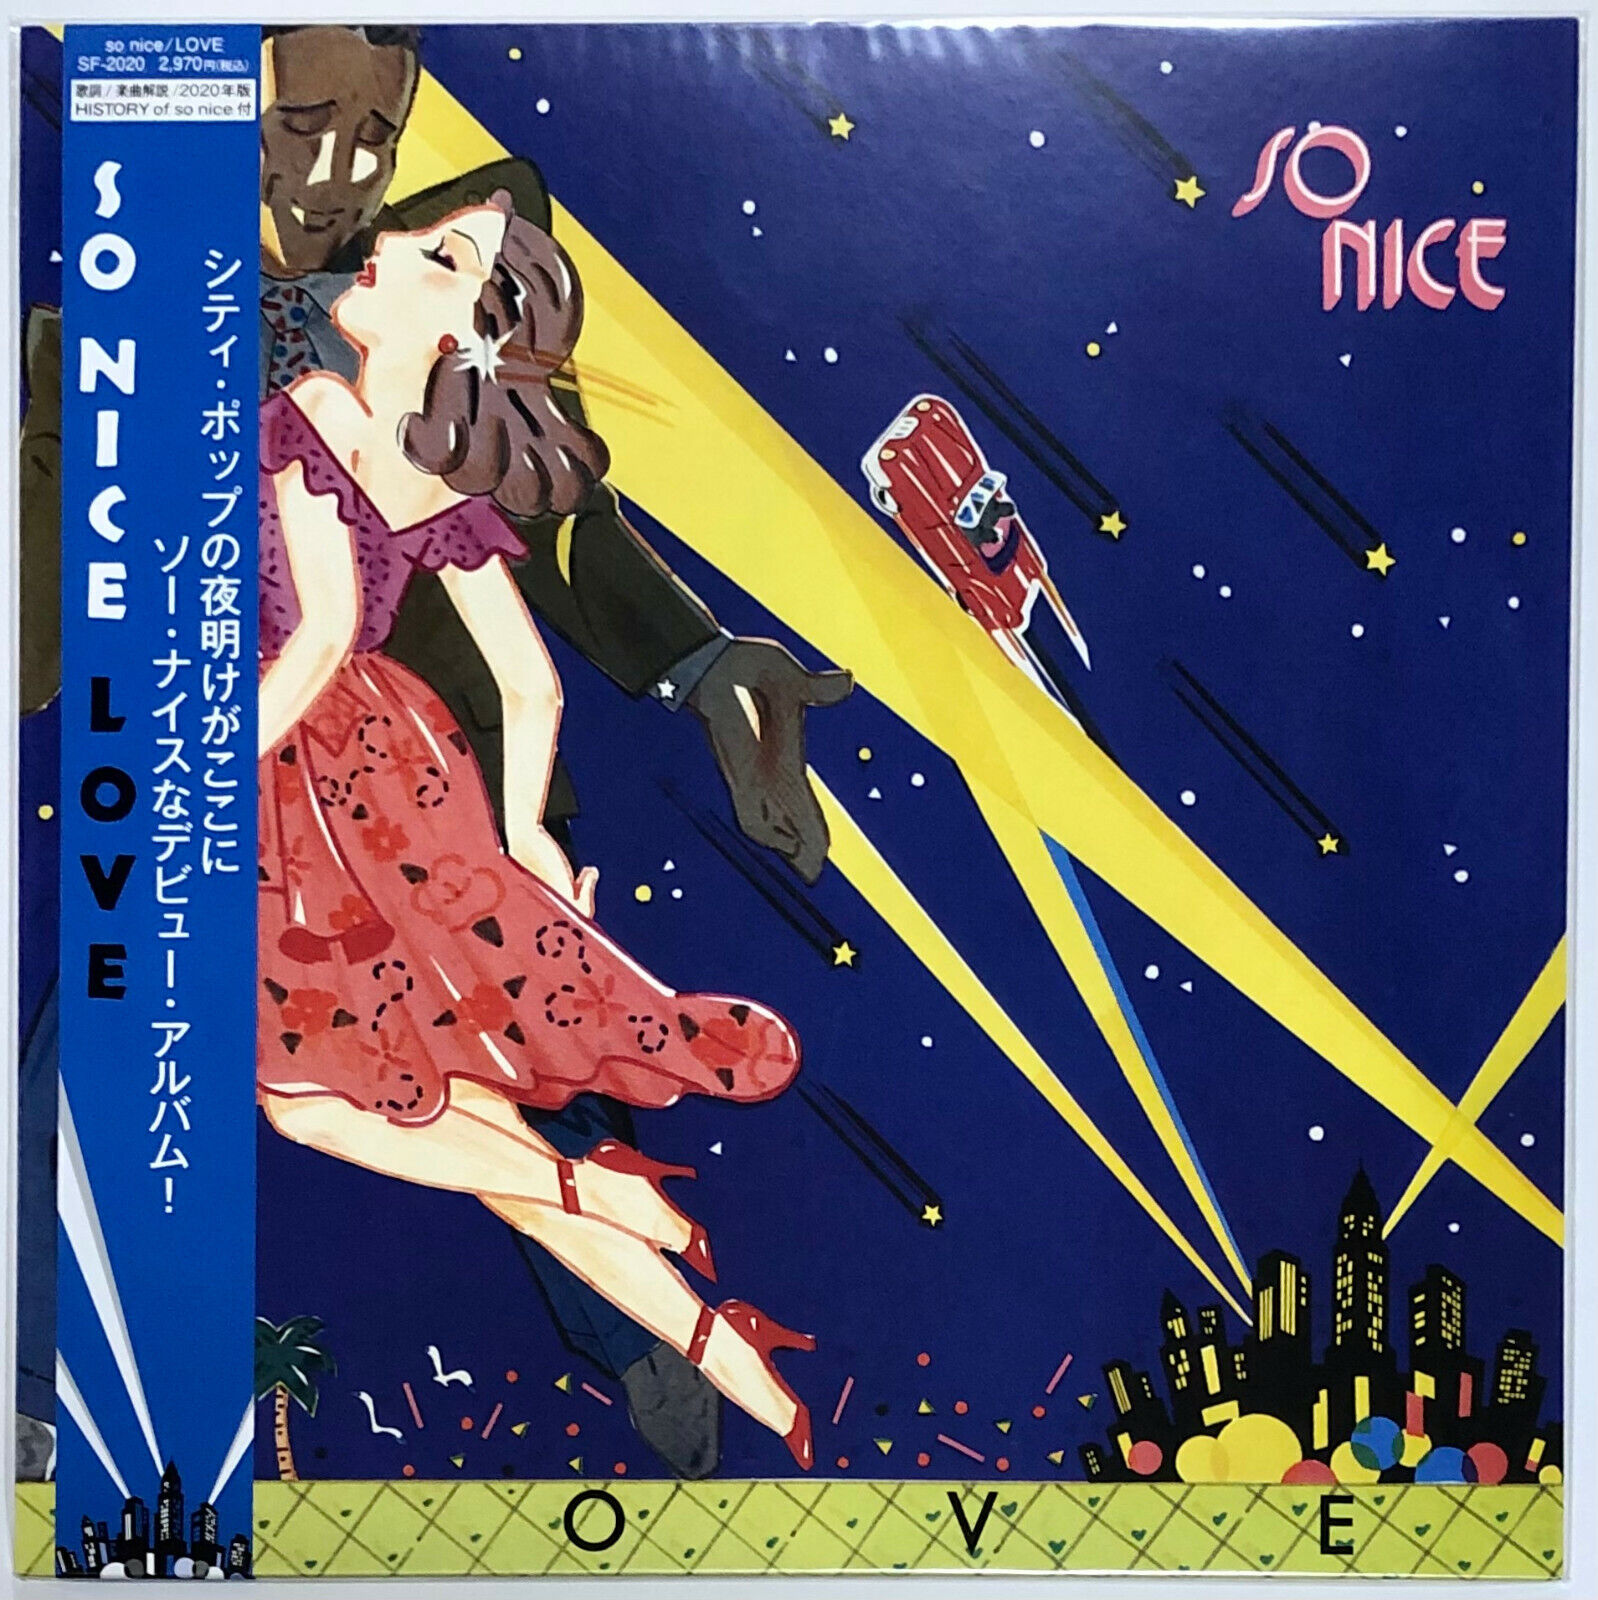 So Nice / LOVE 2020 Edition 1979 Vinyl LP Japan City Pop